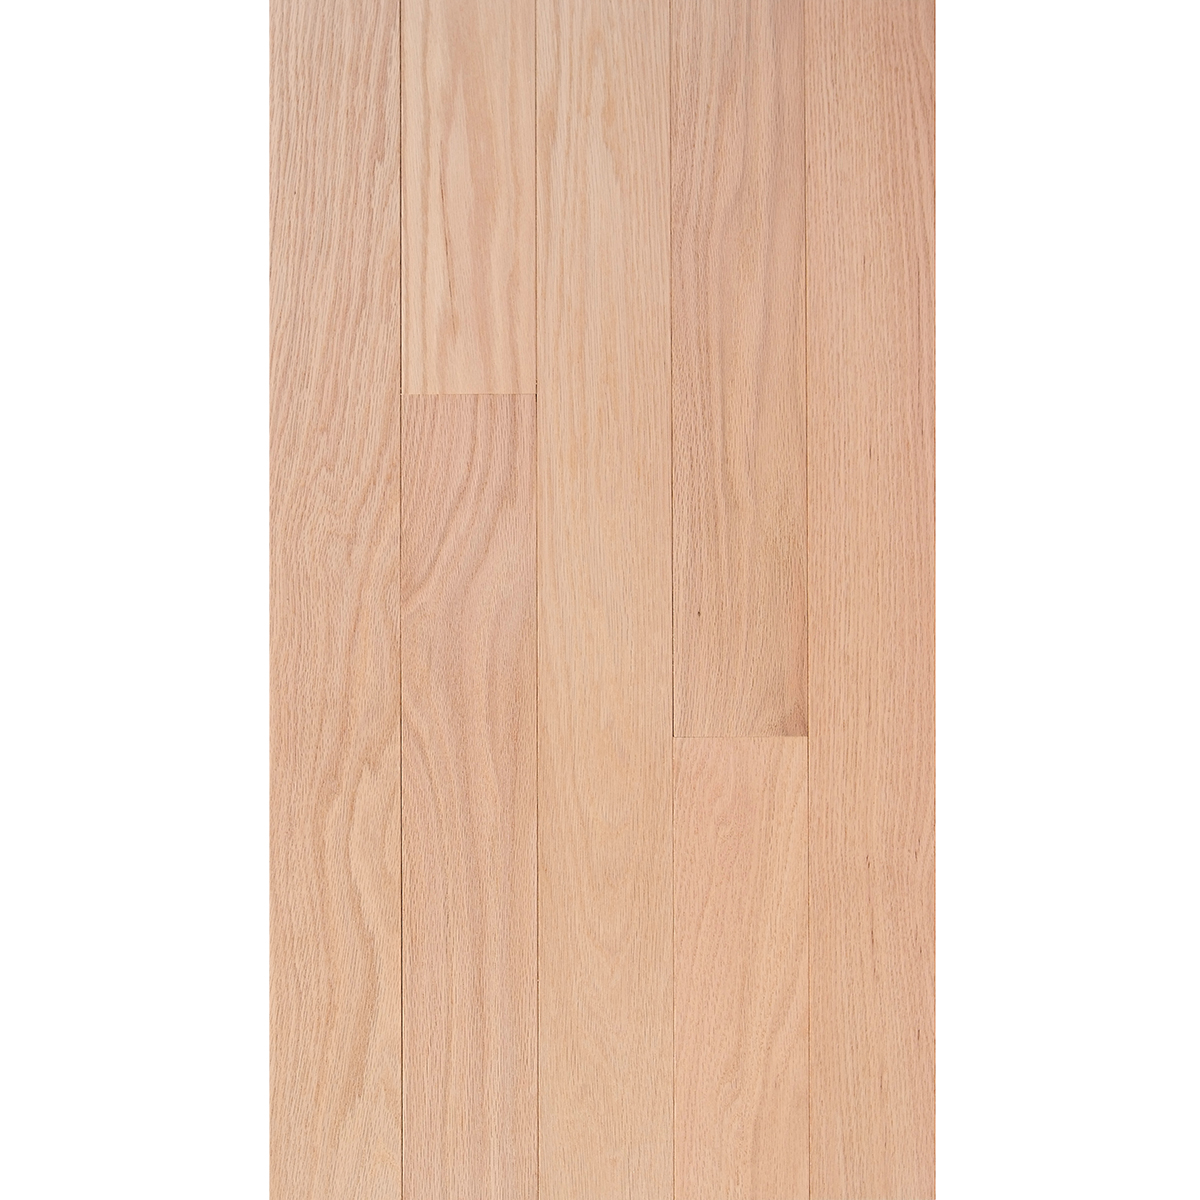 Red Oak 3 4 X 1 Select Grade Flooring, 3 4 Inch Unfinished Oak Hardwood Flooring